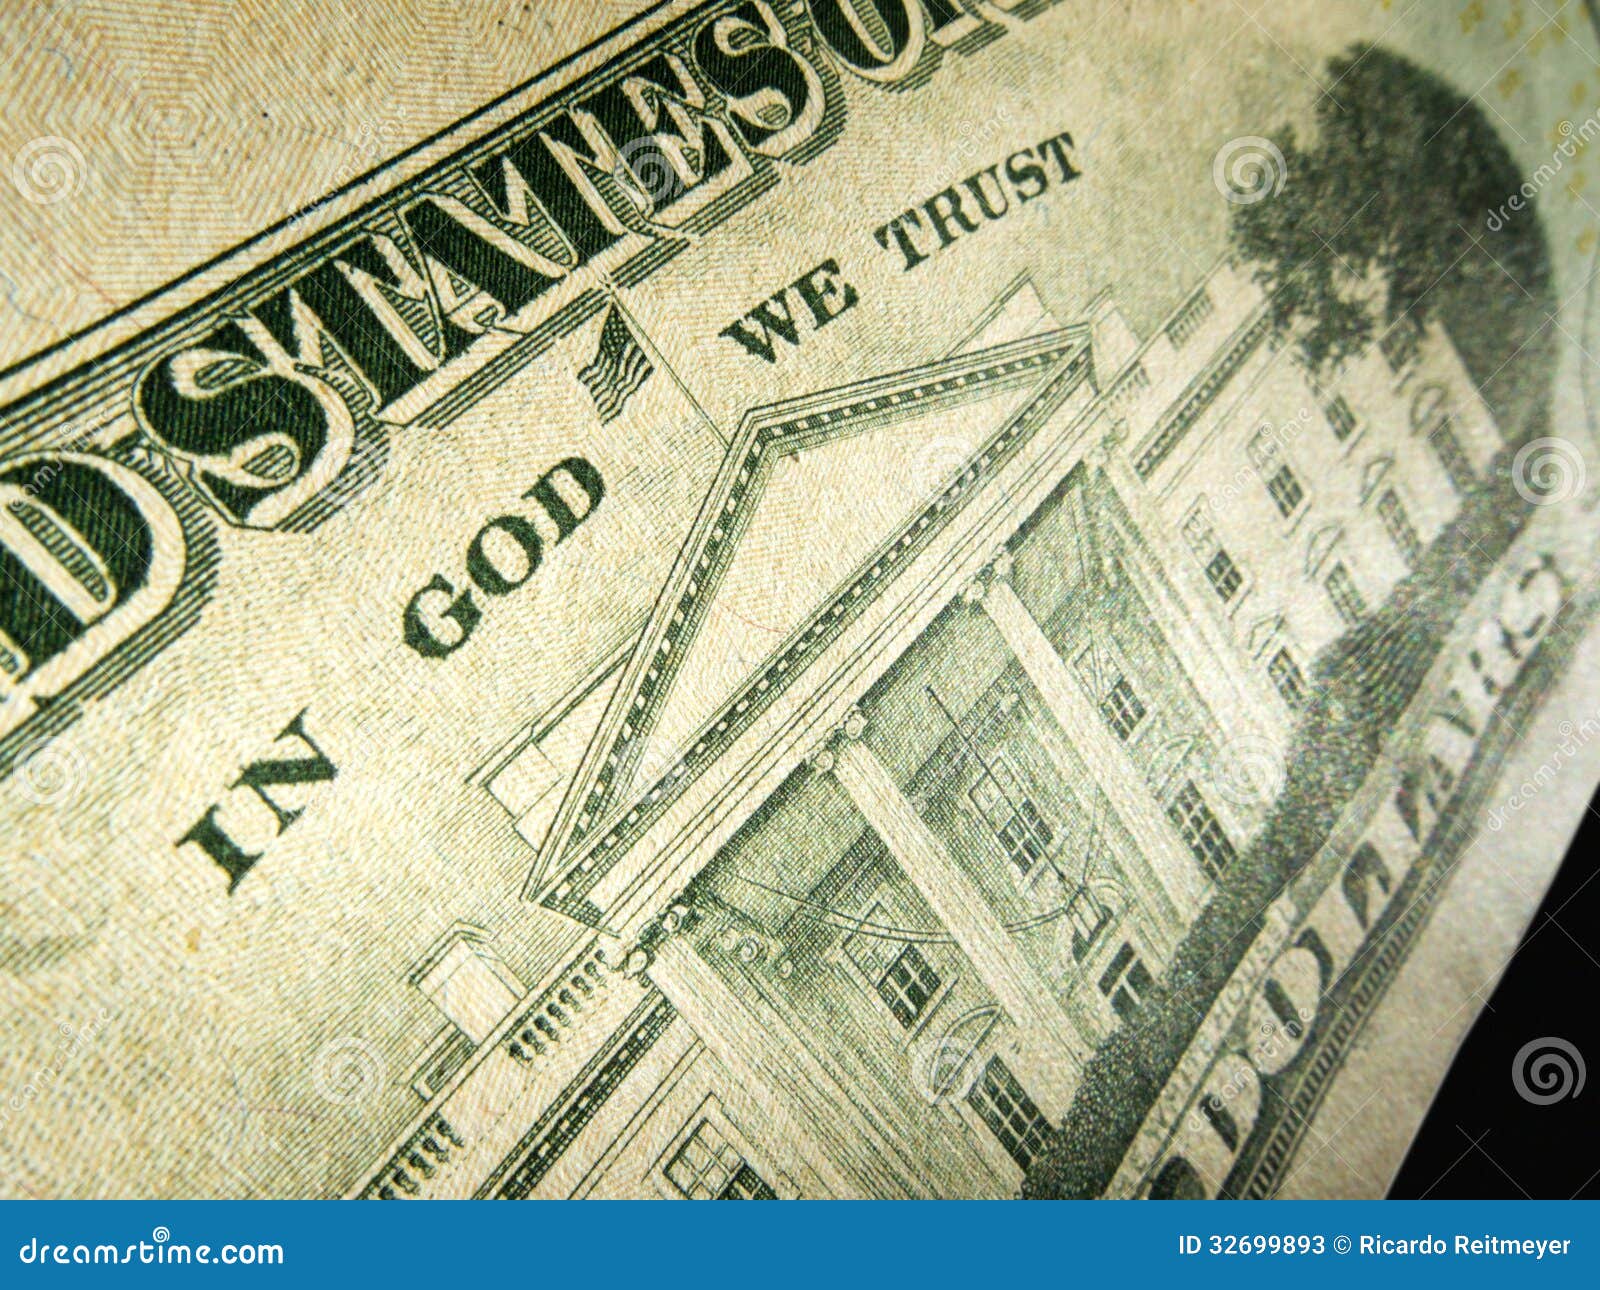 Dollars on top on god. Доллар Бог. Изображение доллара. Надпись на долларе in God we Trust. Американская валюта надпись in God we Trust.